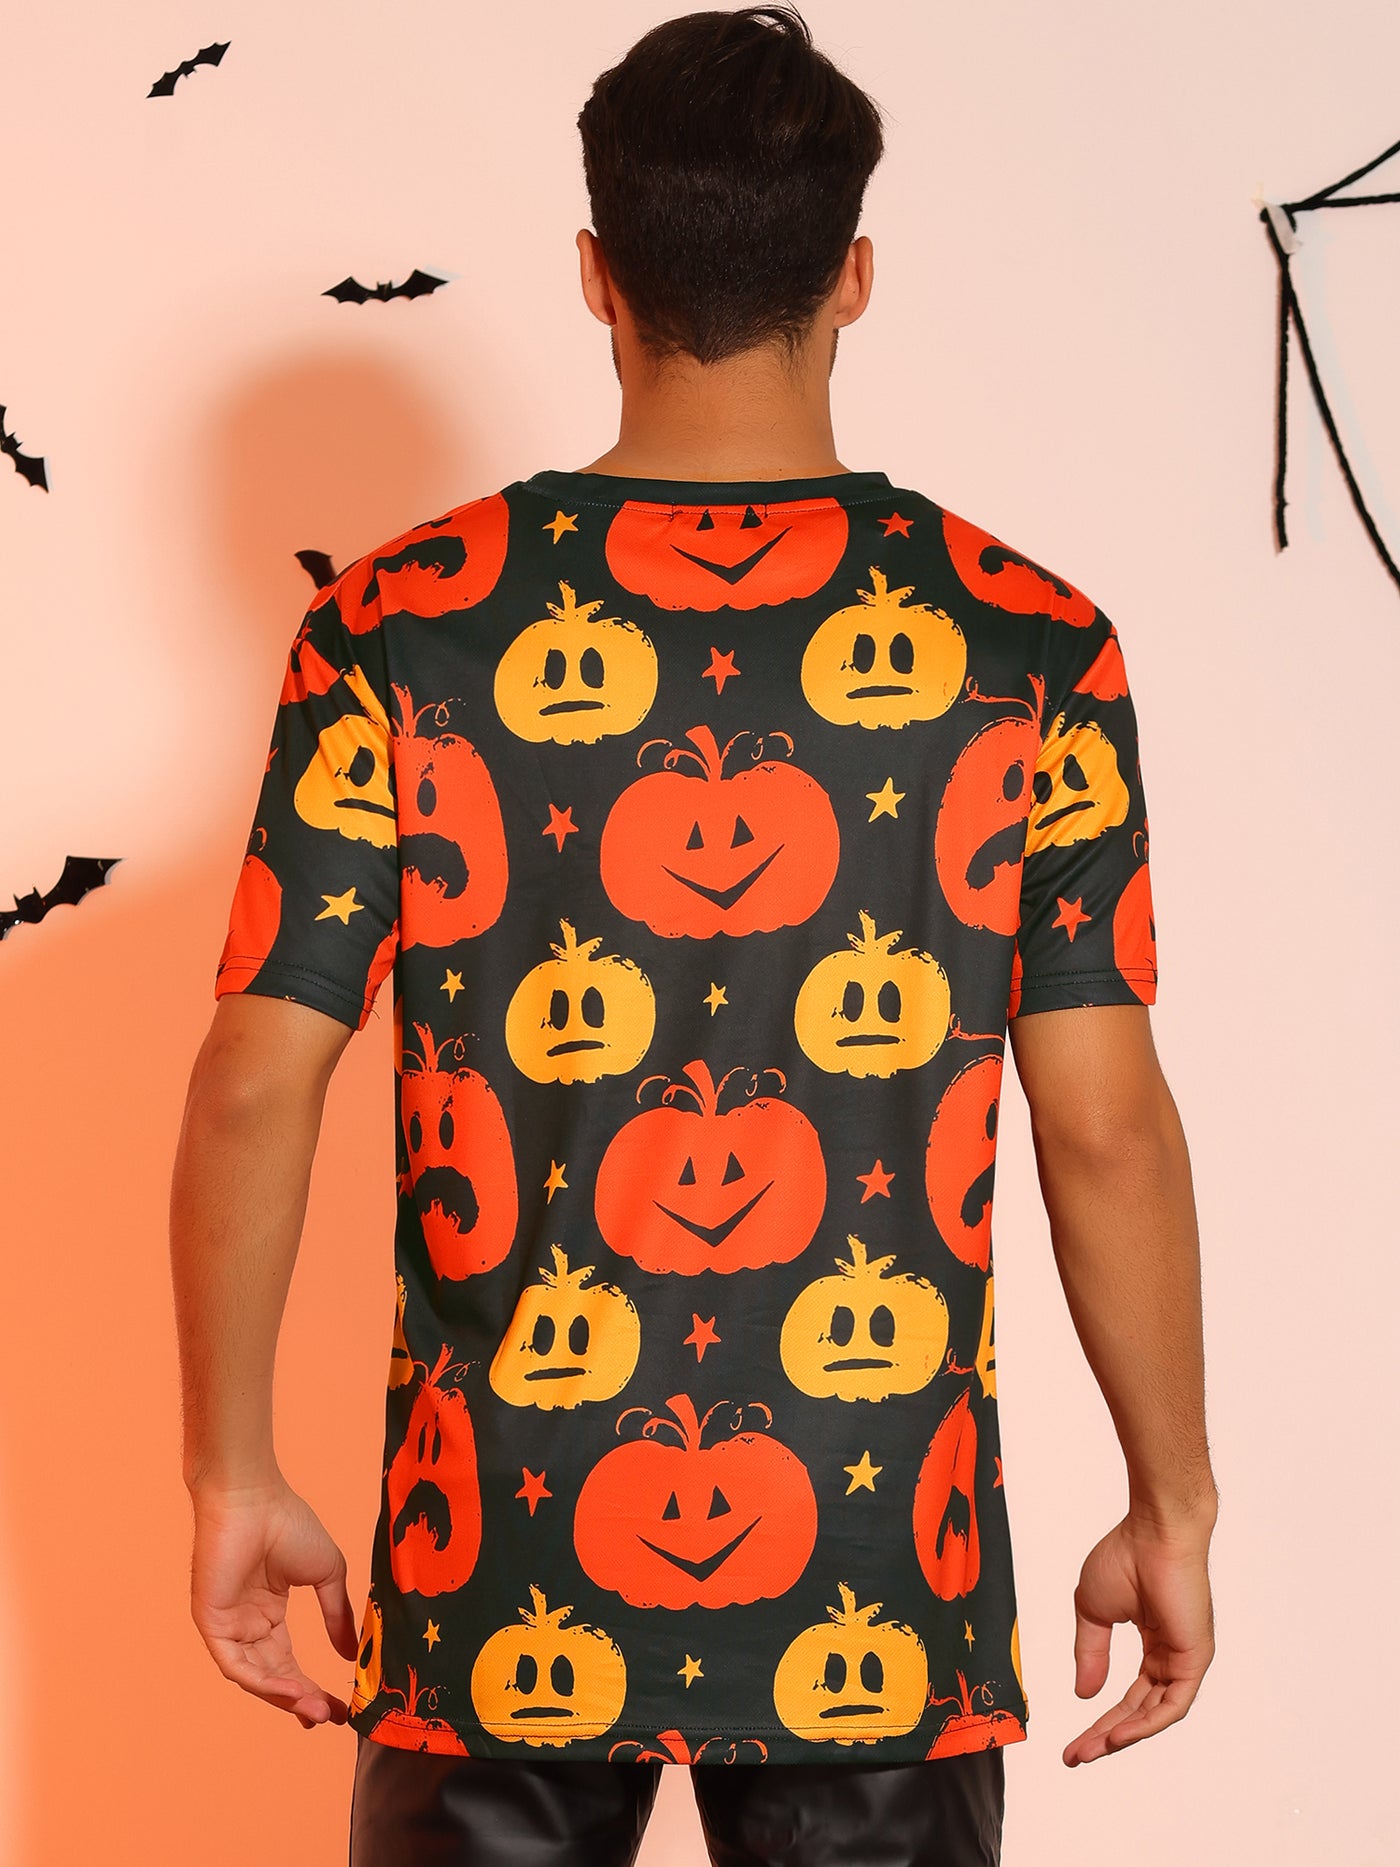 Bublédon Men's Short Sleeved Halloween Party Graphic Tee Pumpkin Printed T-Shirt